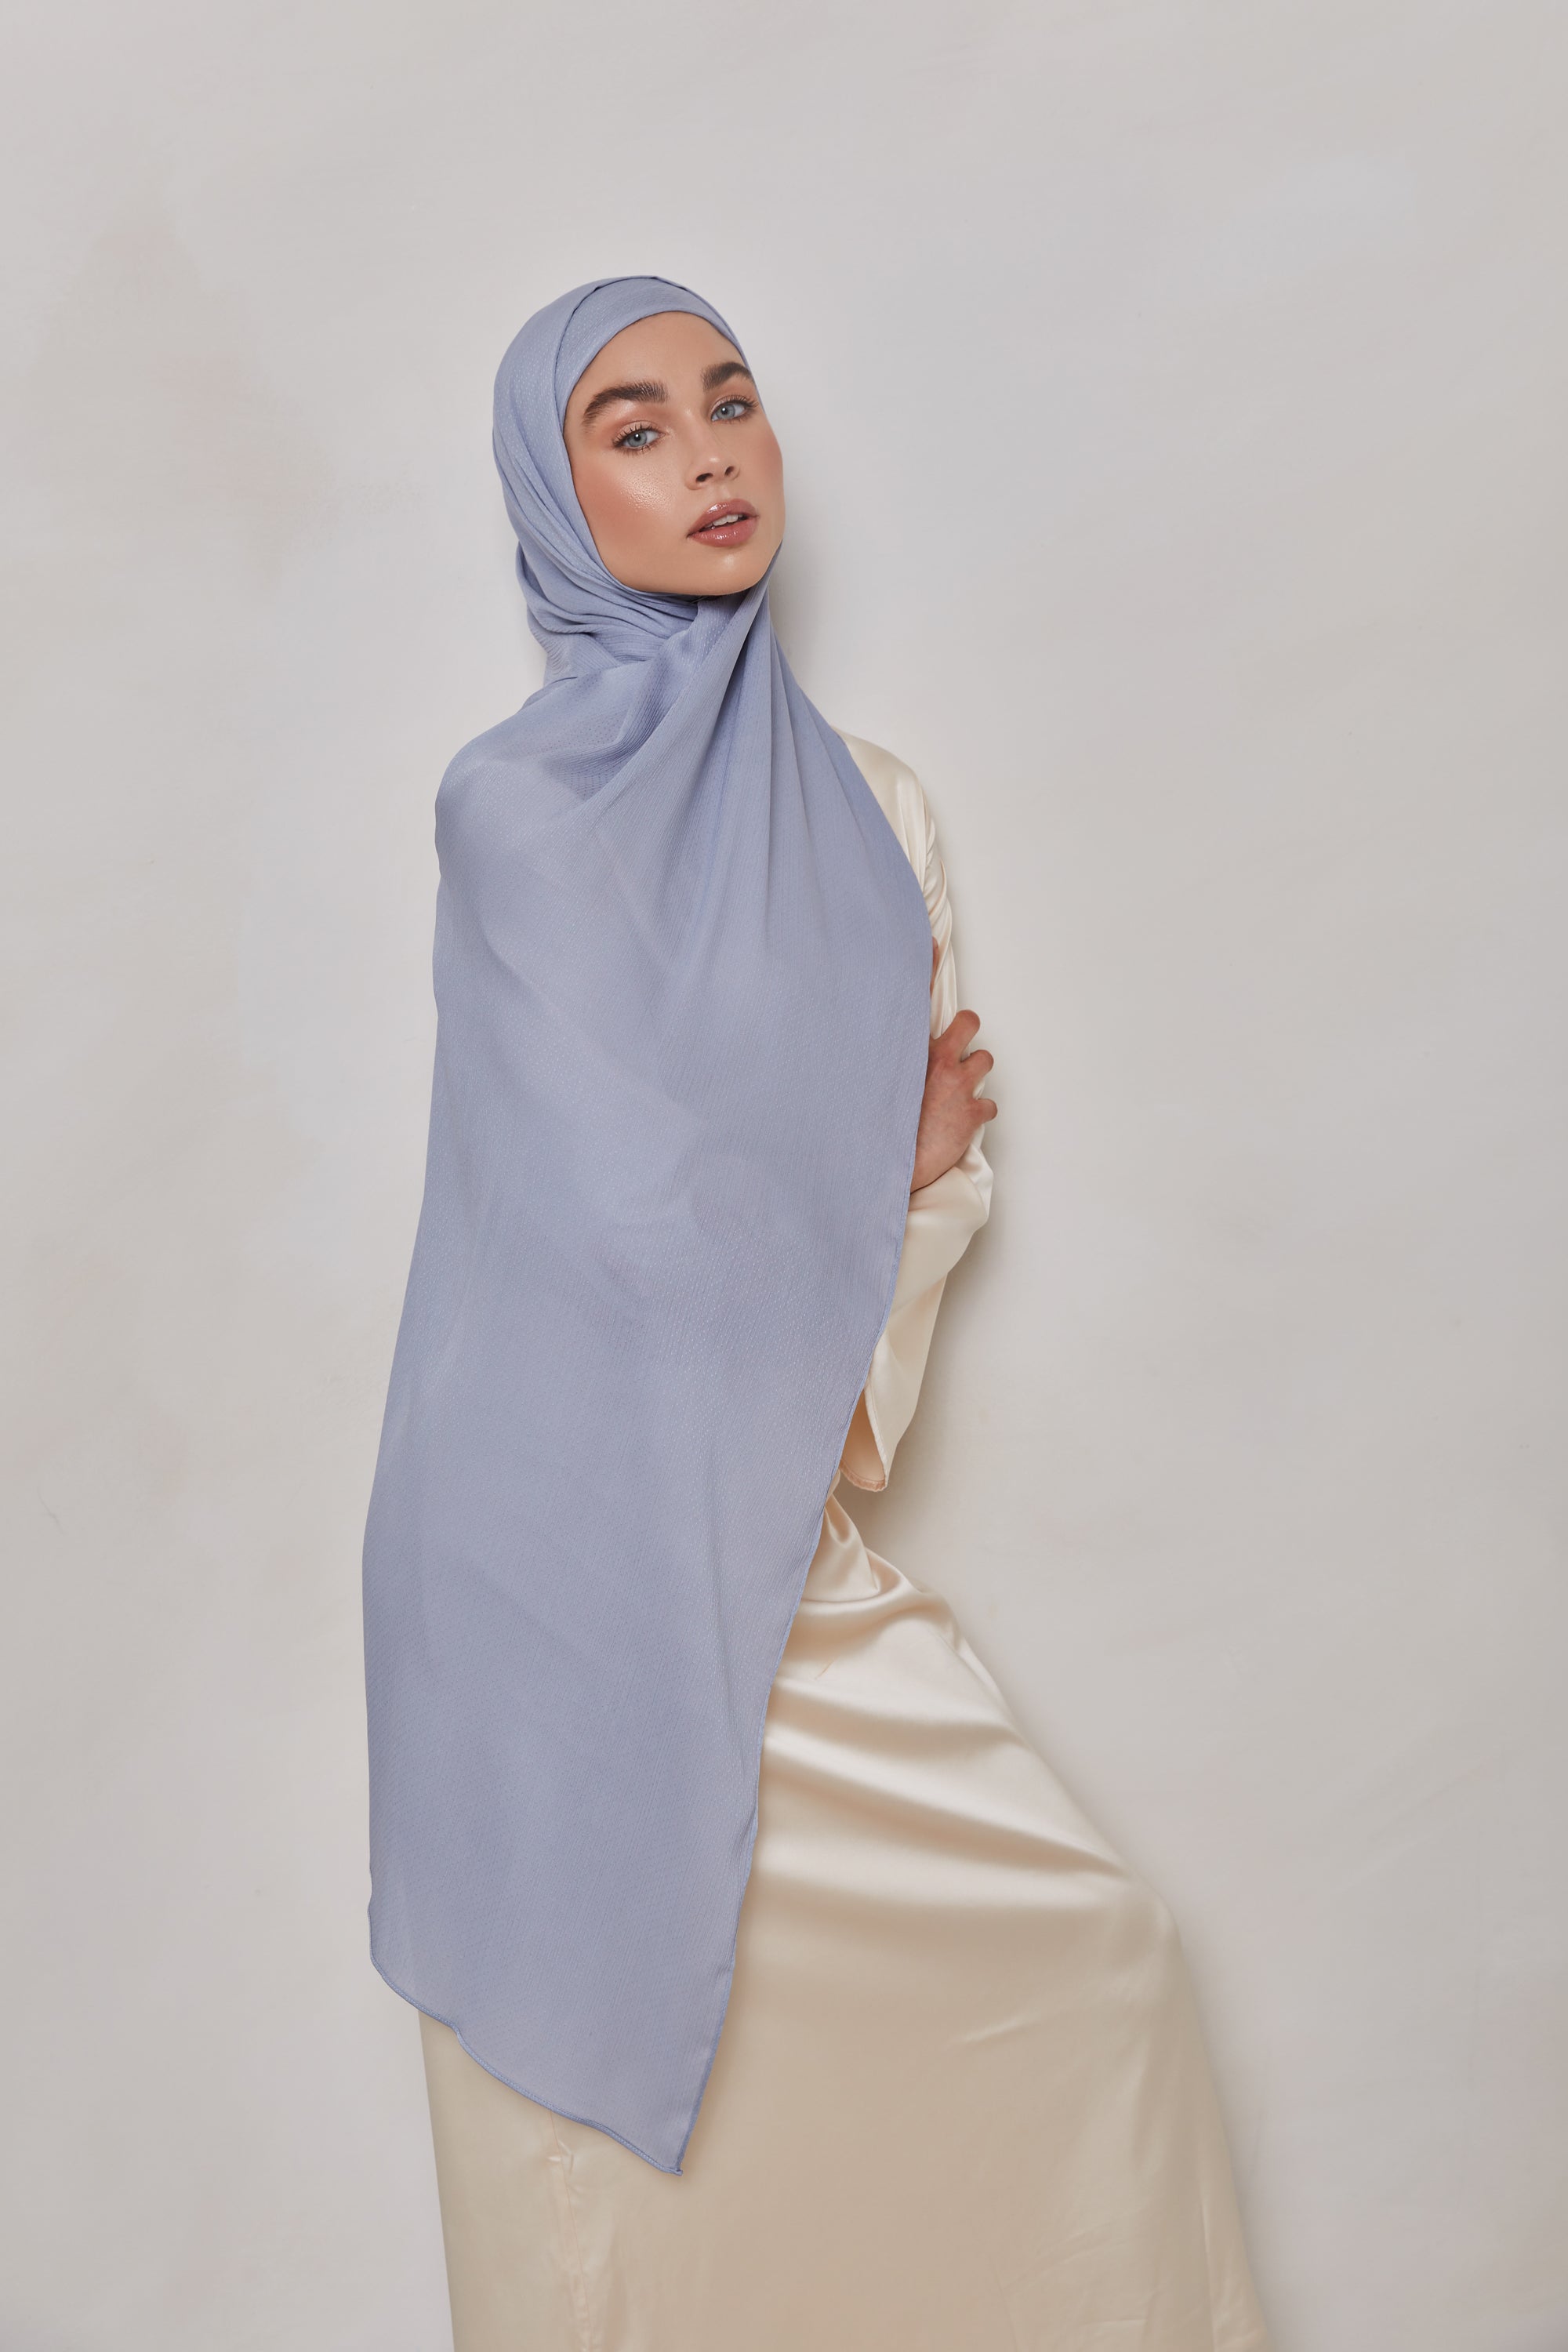 TEXTURE Crepe Hijab - Denim Dots Veiled Collection 